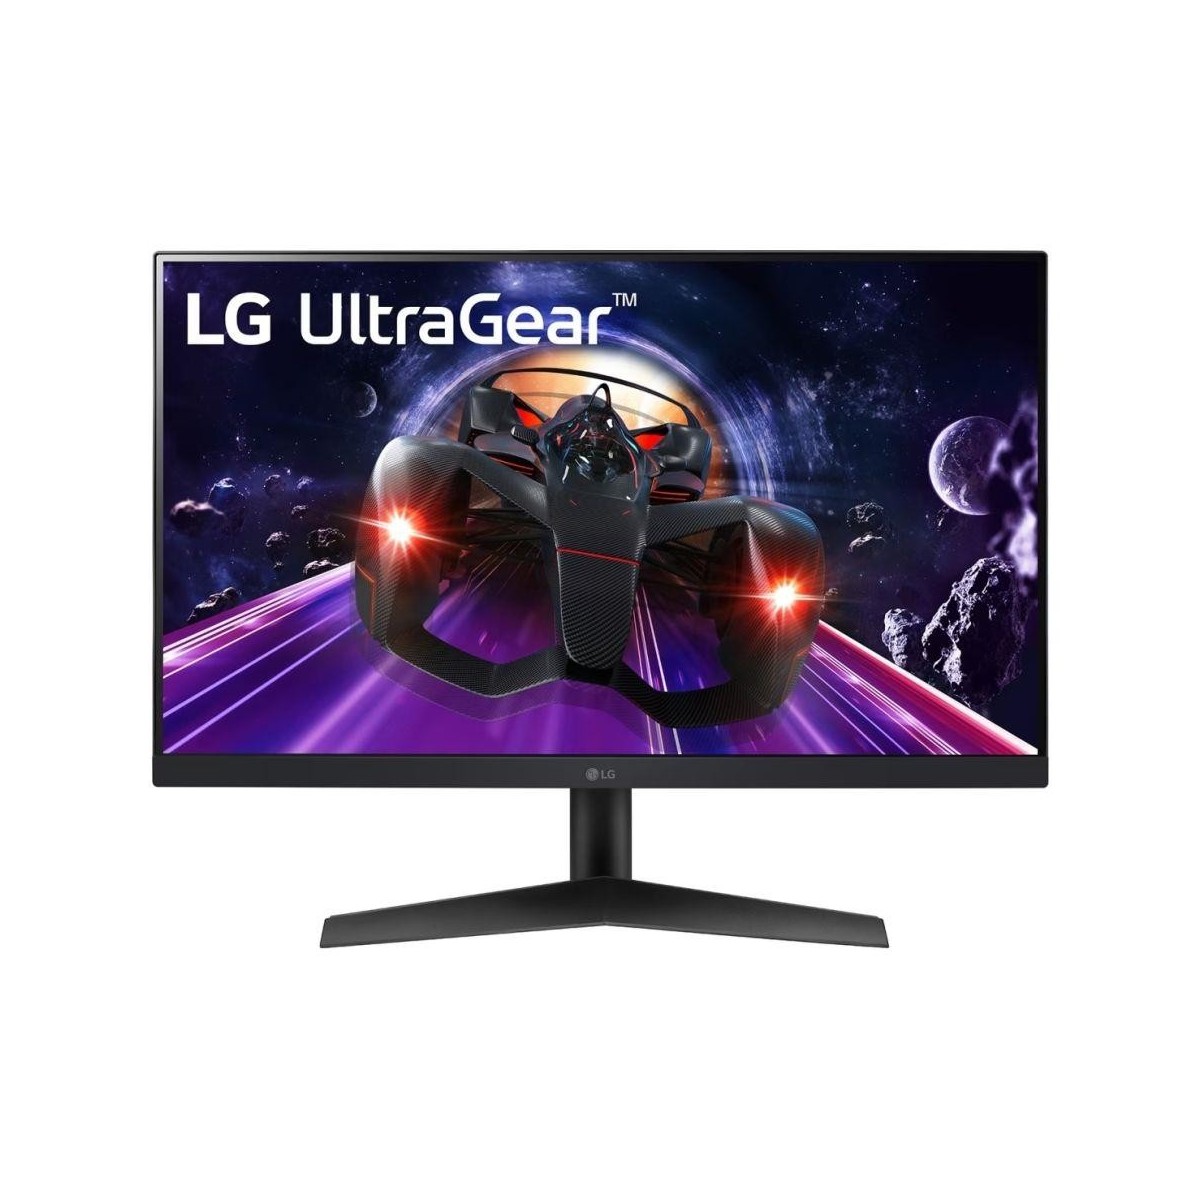 LG LED-Monitor UltraGear 24GN60R-B - 61 cm 23.8 - 1920 x 1080 Full HD - 61 cm - 23.8